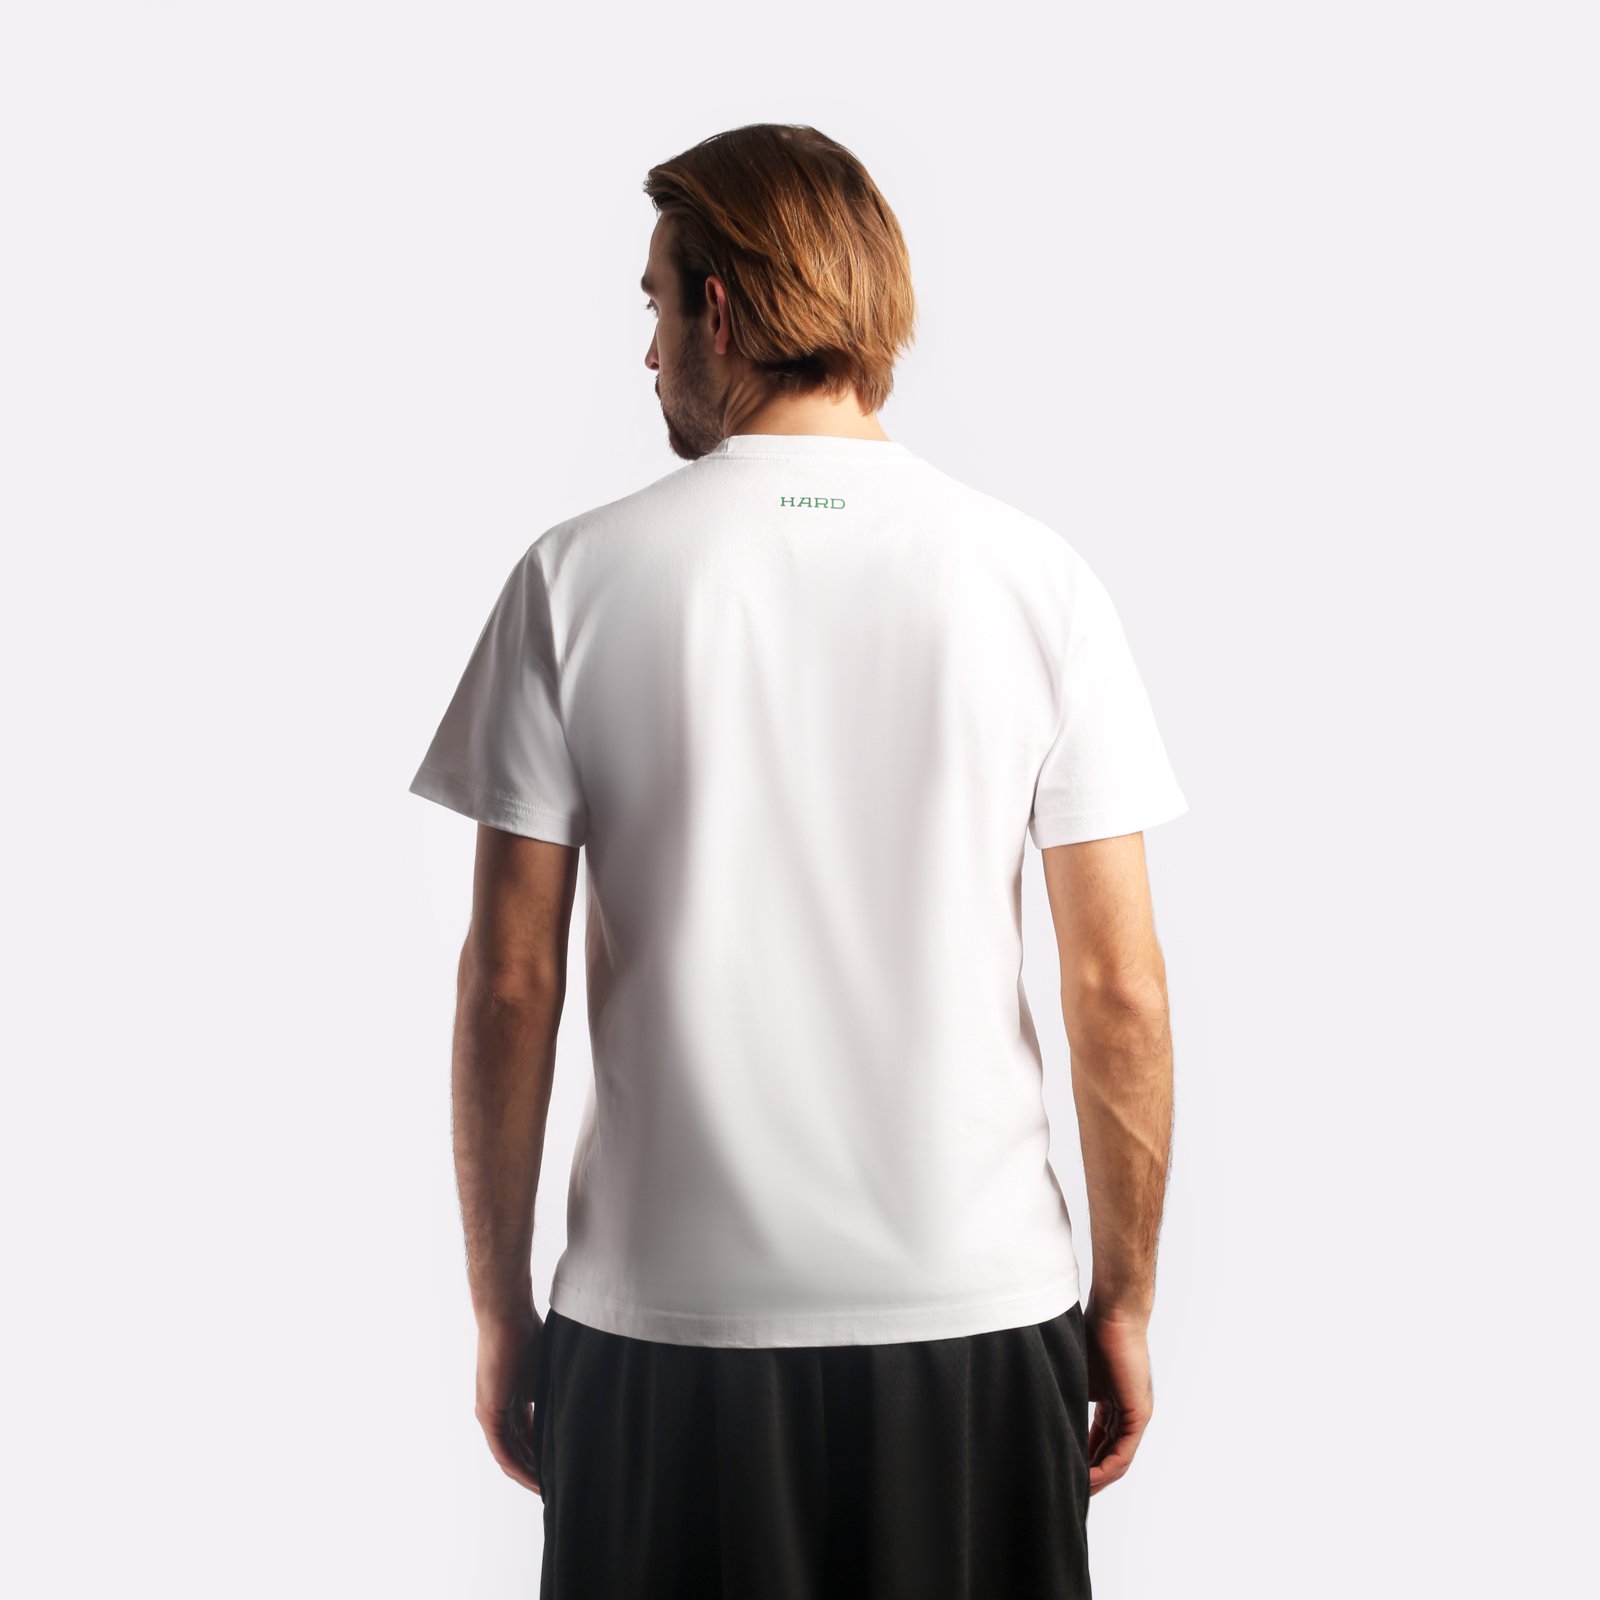 мужская футболка Hard Simple Tee  (Hrdtee-white)  - цена, описание, фото 2